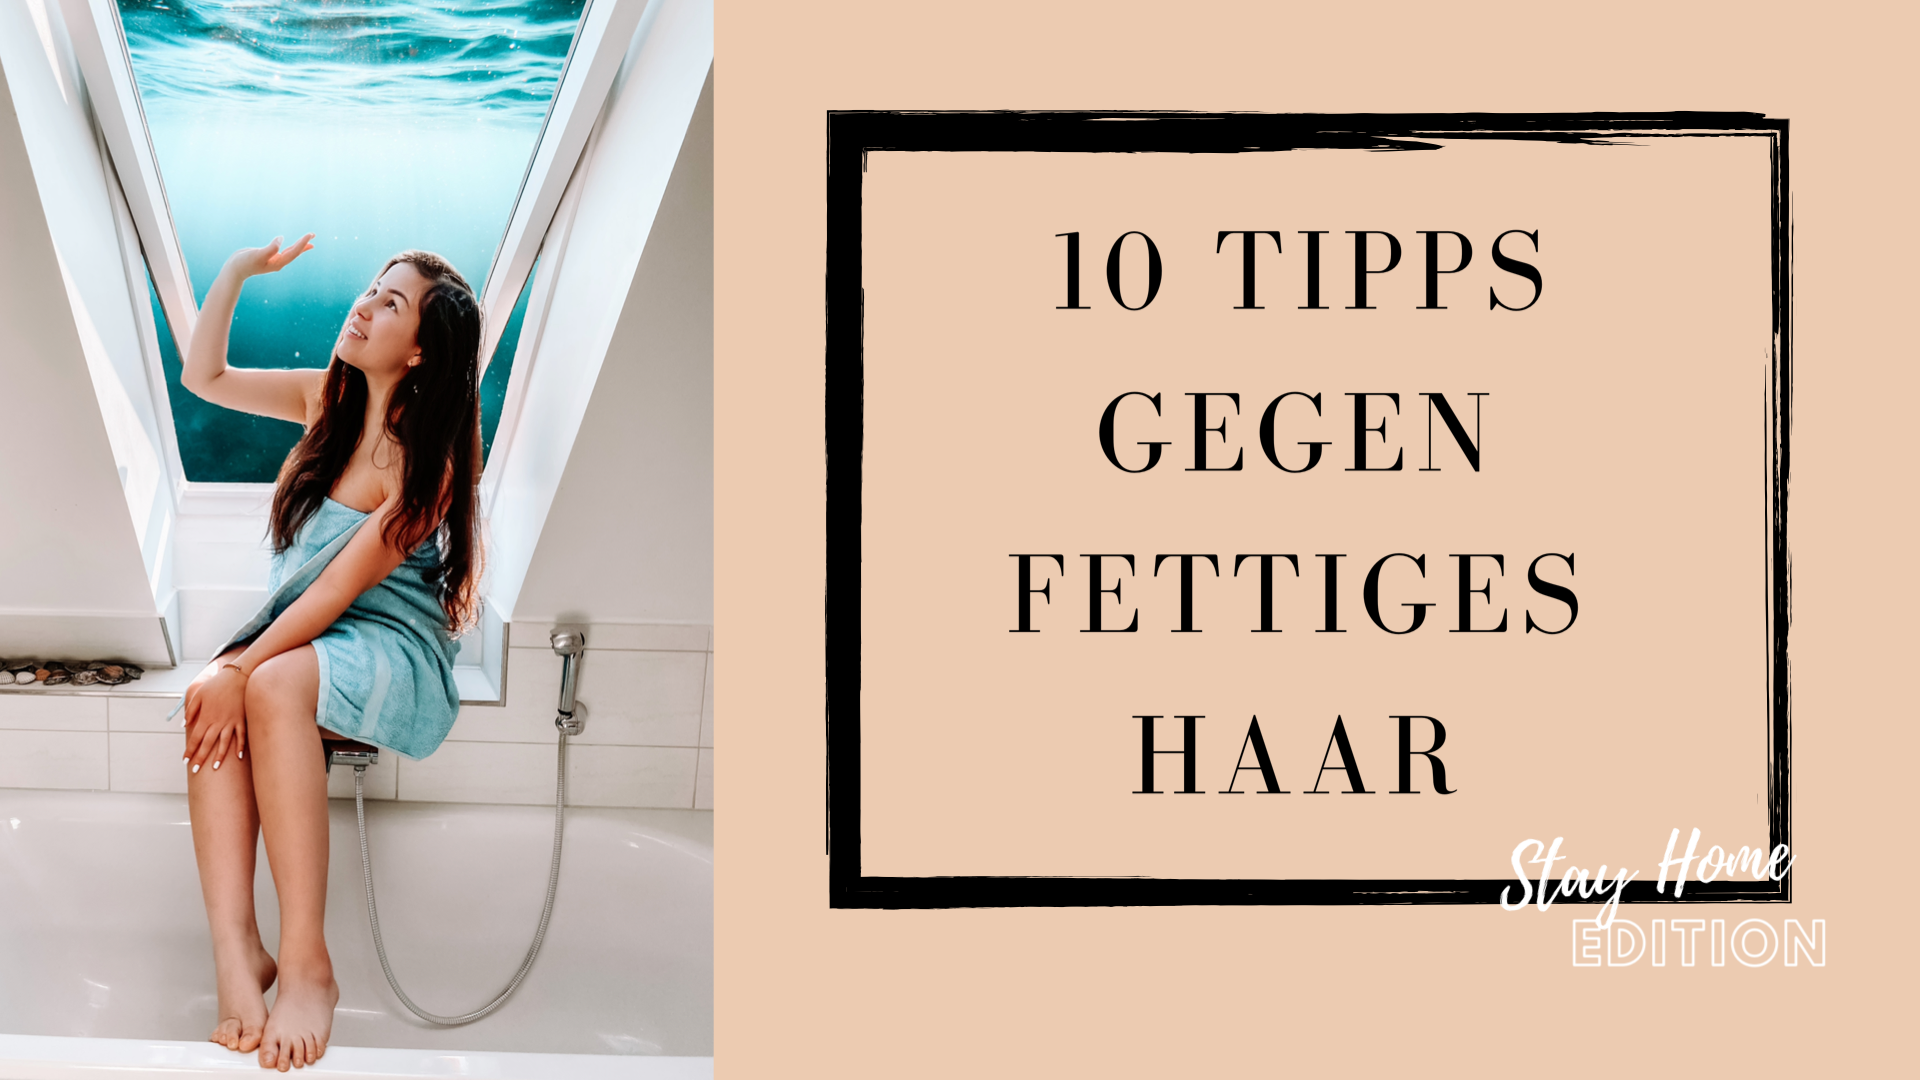 10 Tipps Gegen Fettiges Haar Perfekt Fur Die Quarantane Zeit